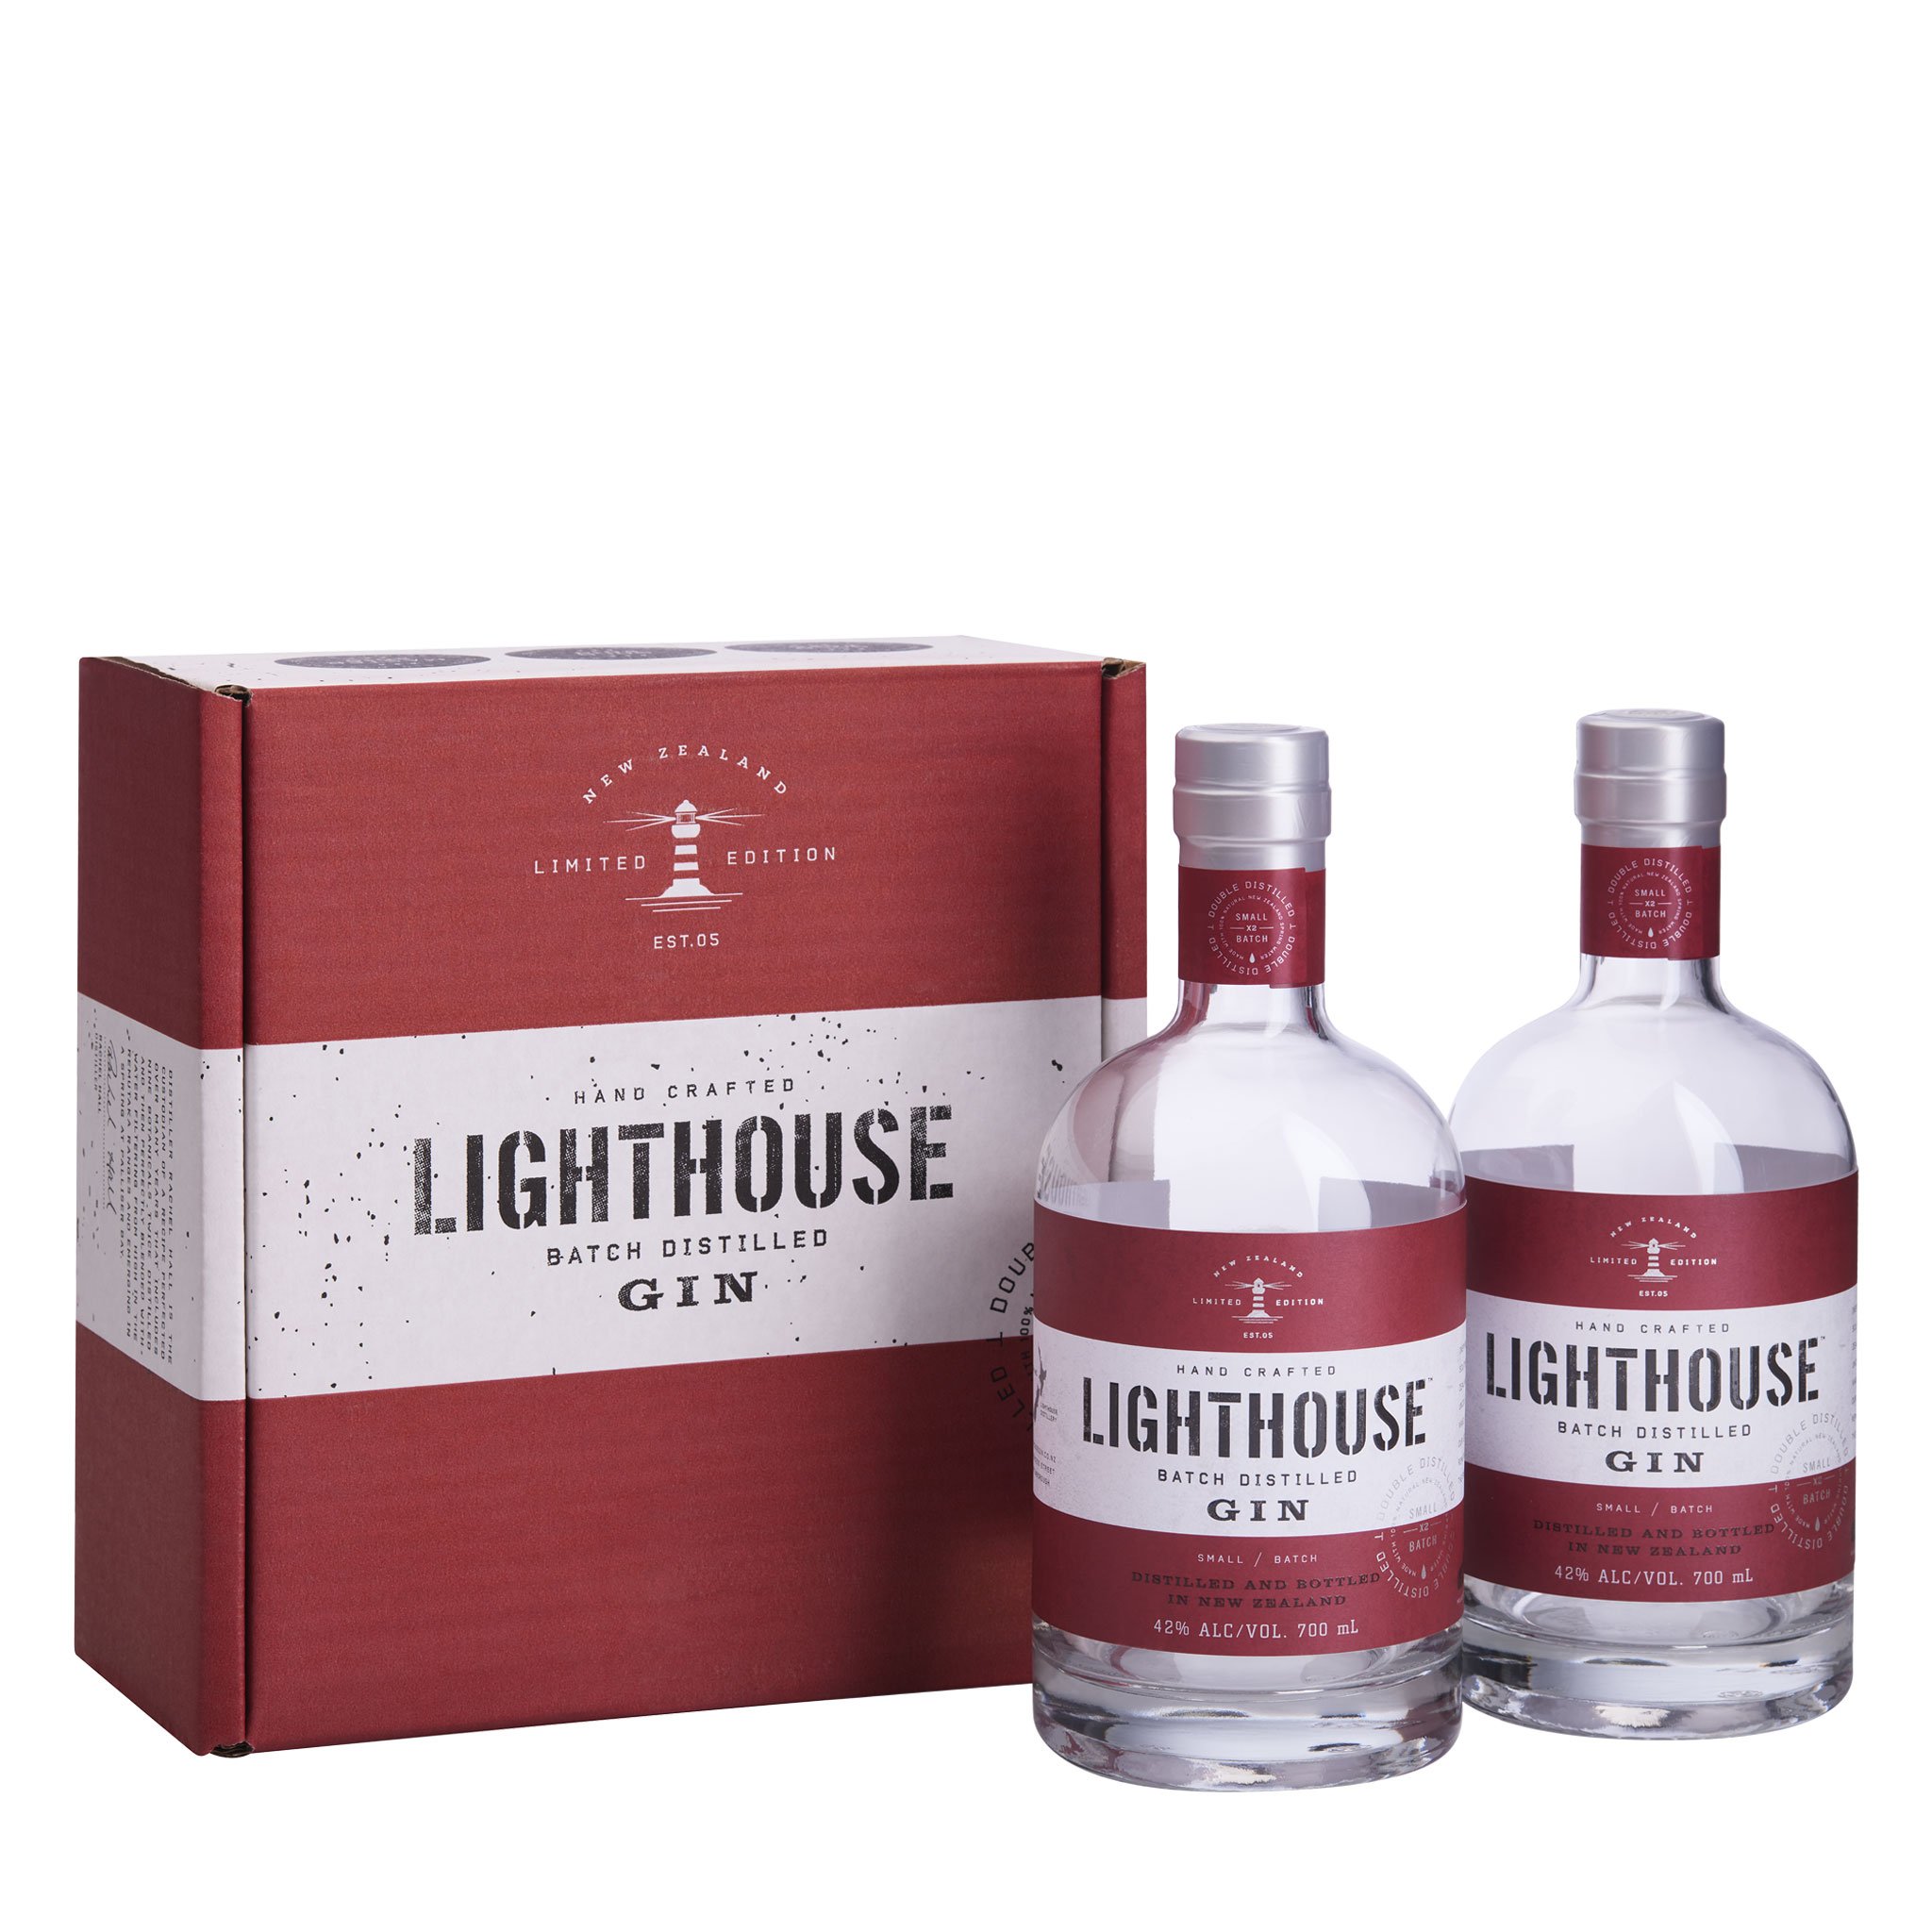 Lighthouse Gin Original 2 700ml bottles